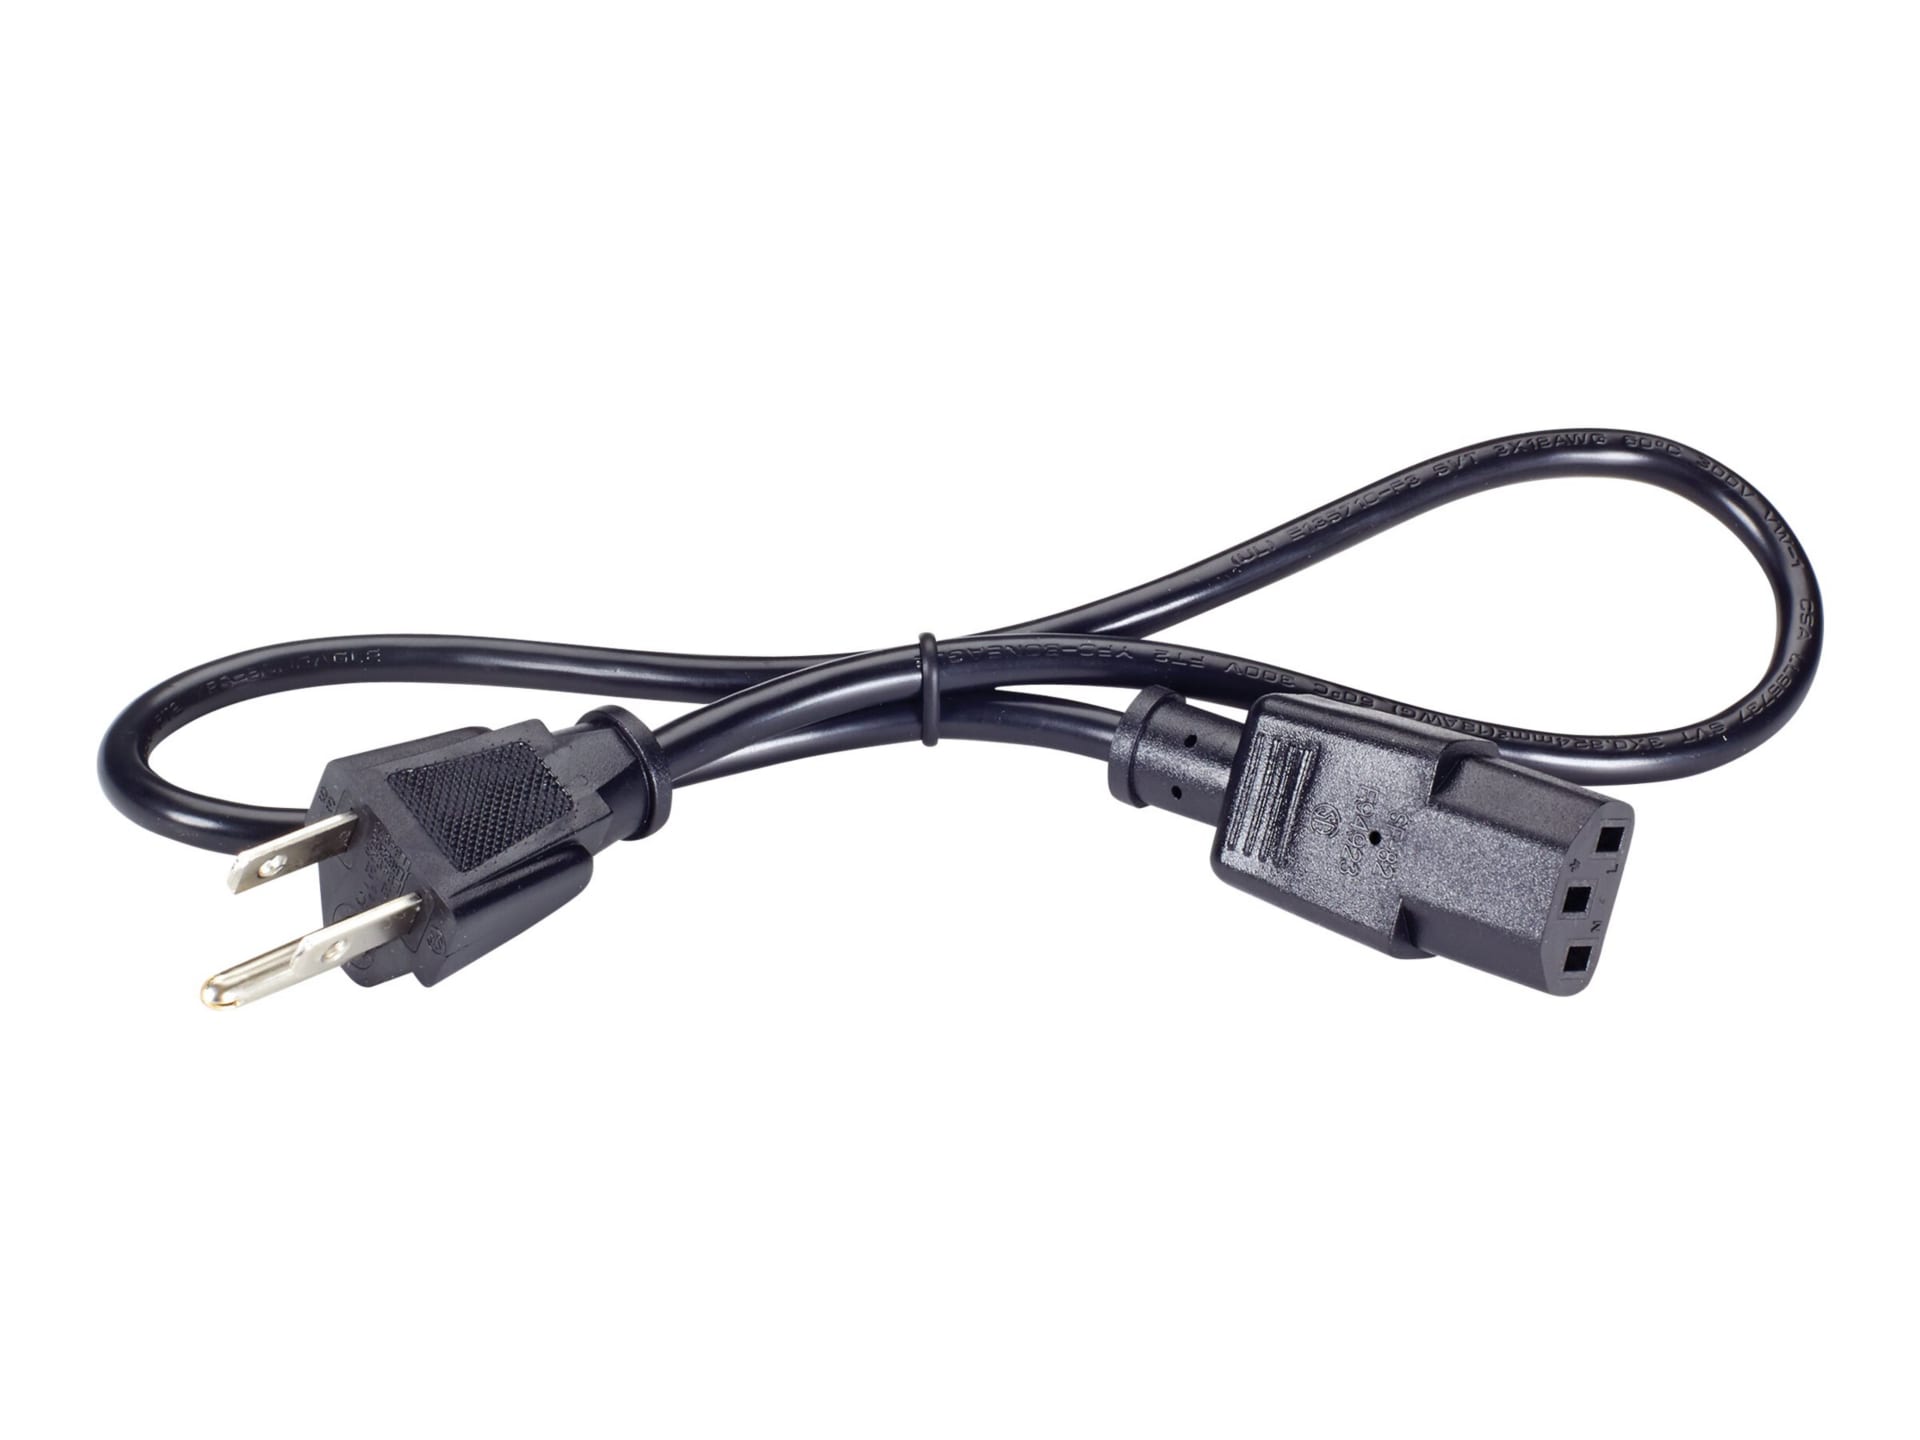 Black Box - power cable - NEMA 5-15P to power IEC 60320 C13 - 2 ft